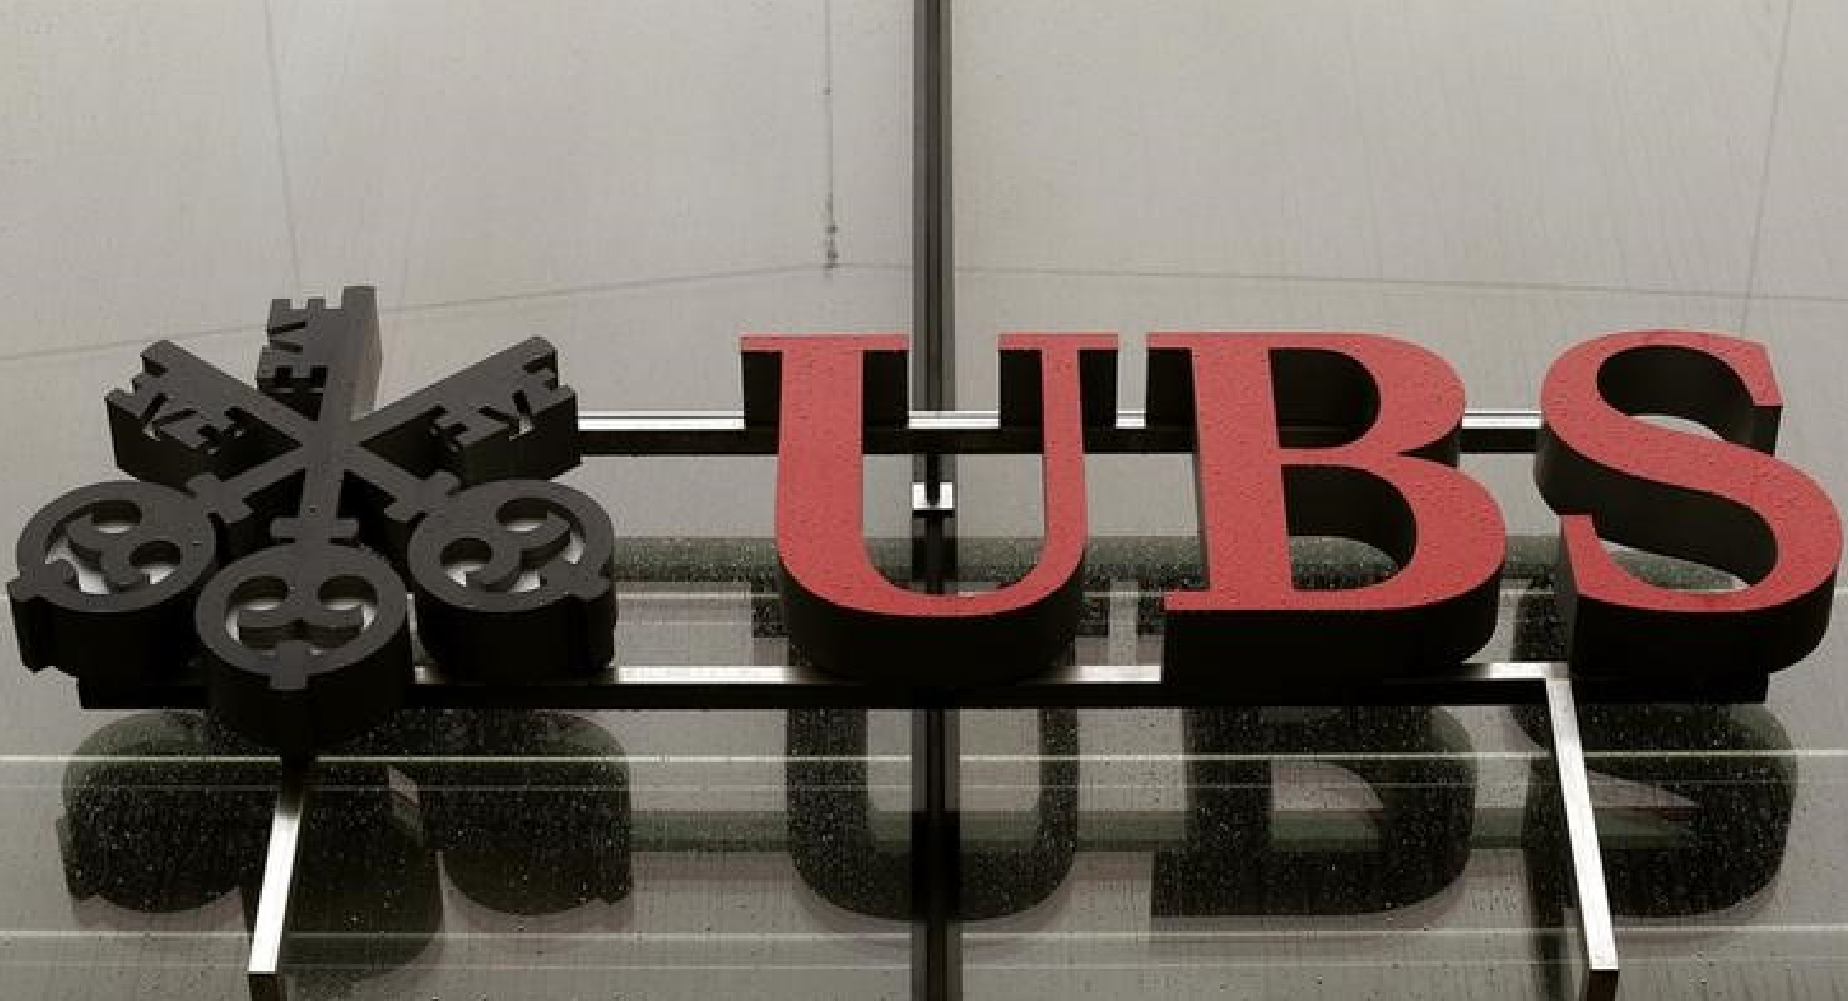 UBS inflación mercados Wall Street